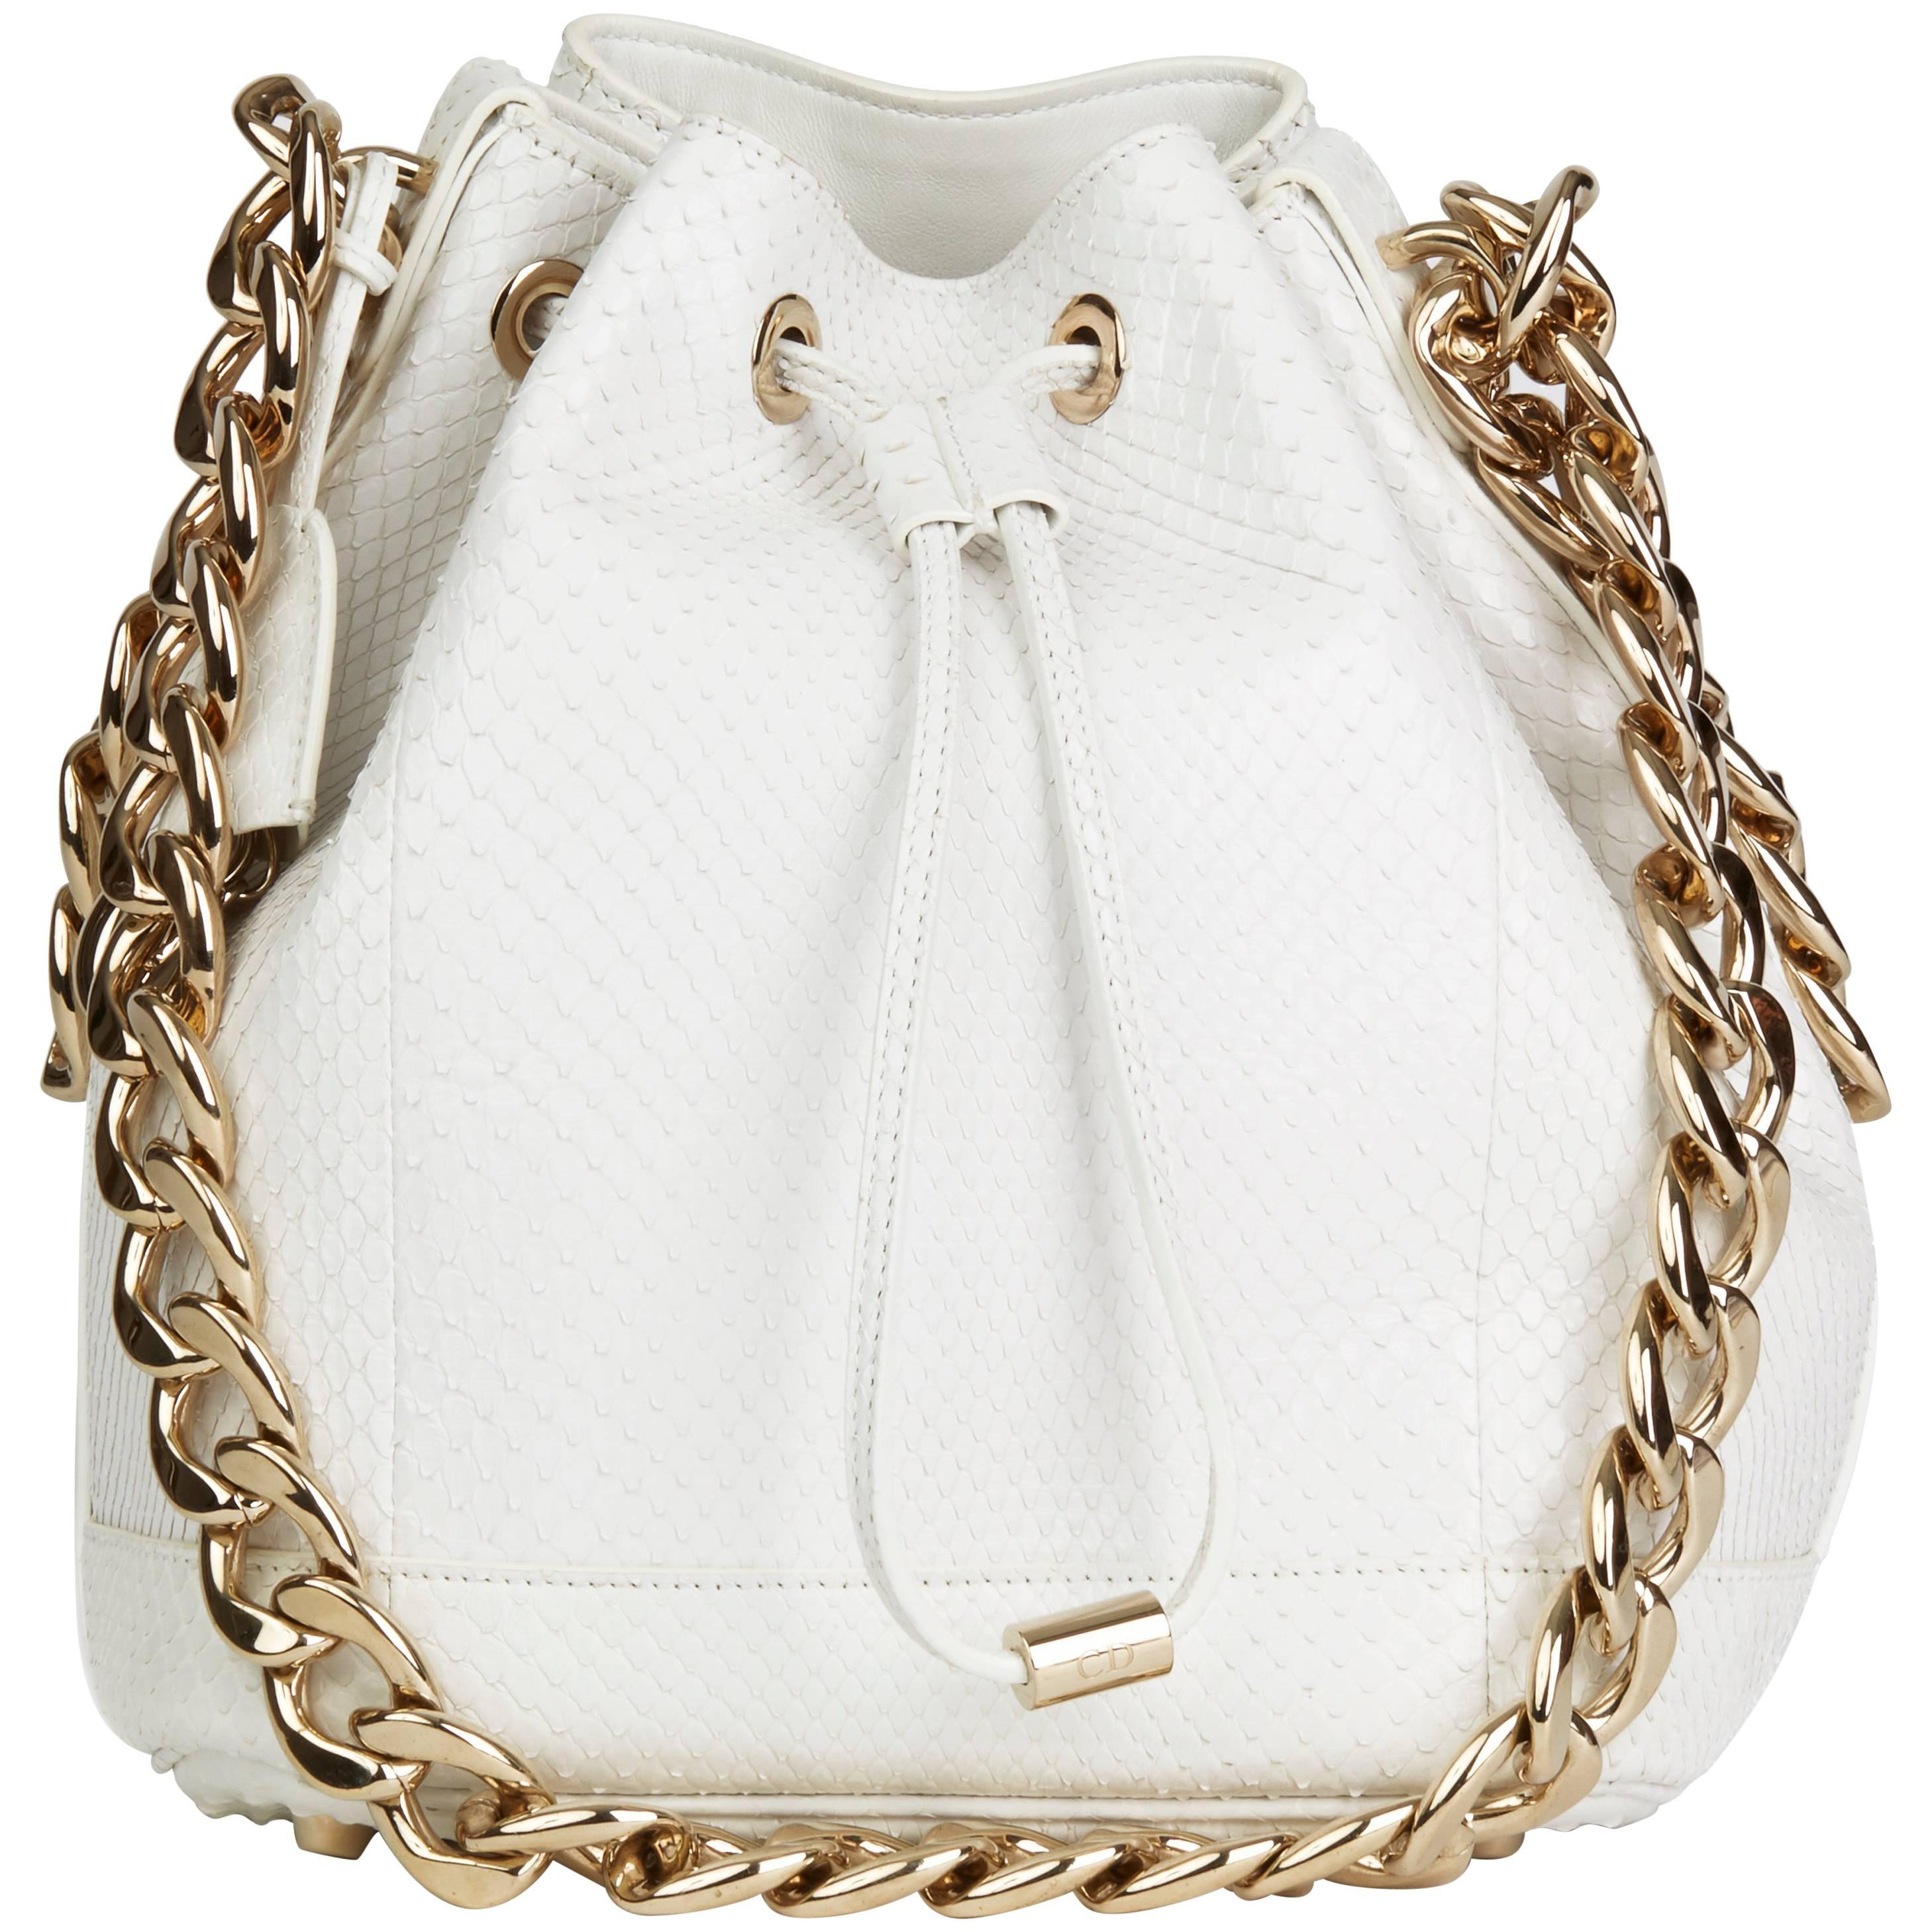 2015 Christian Dior White Python Leather Small Bubble Bucket Bag